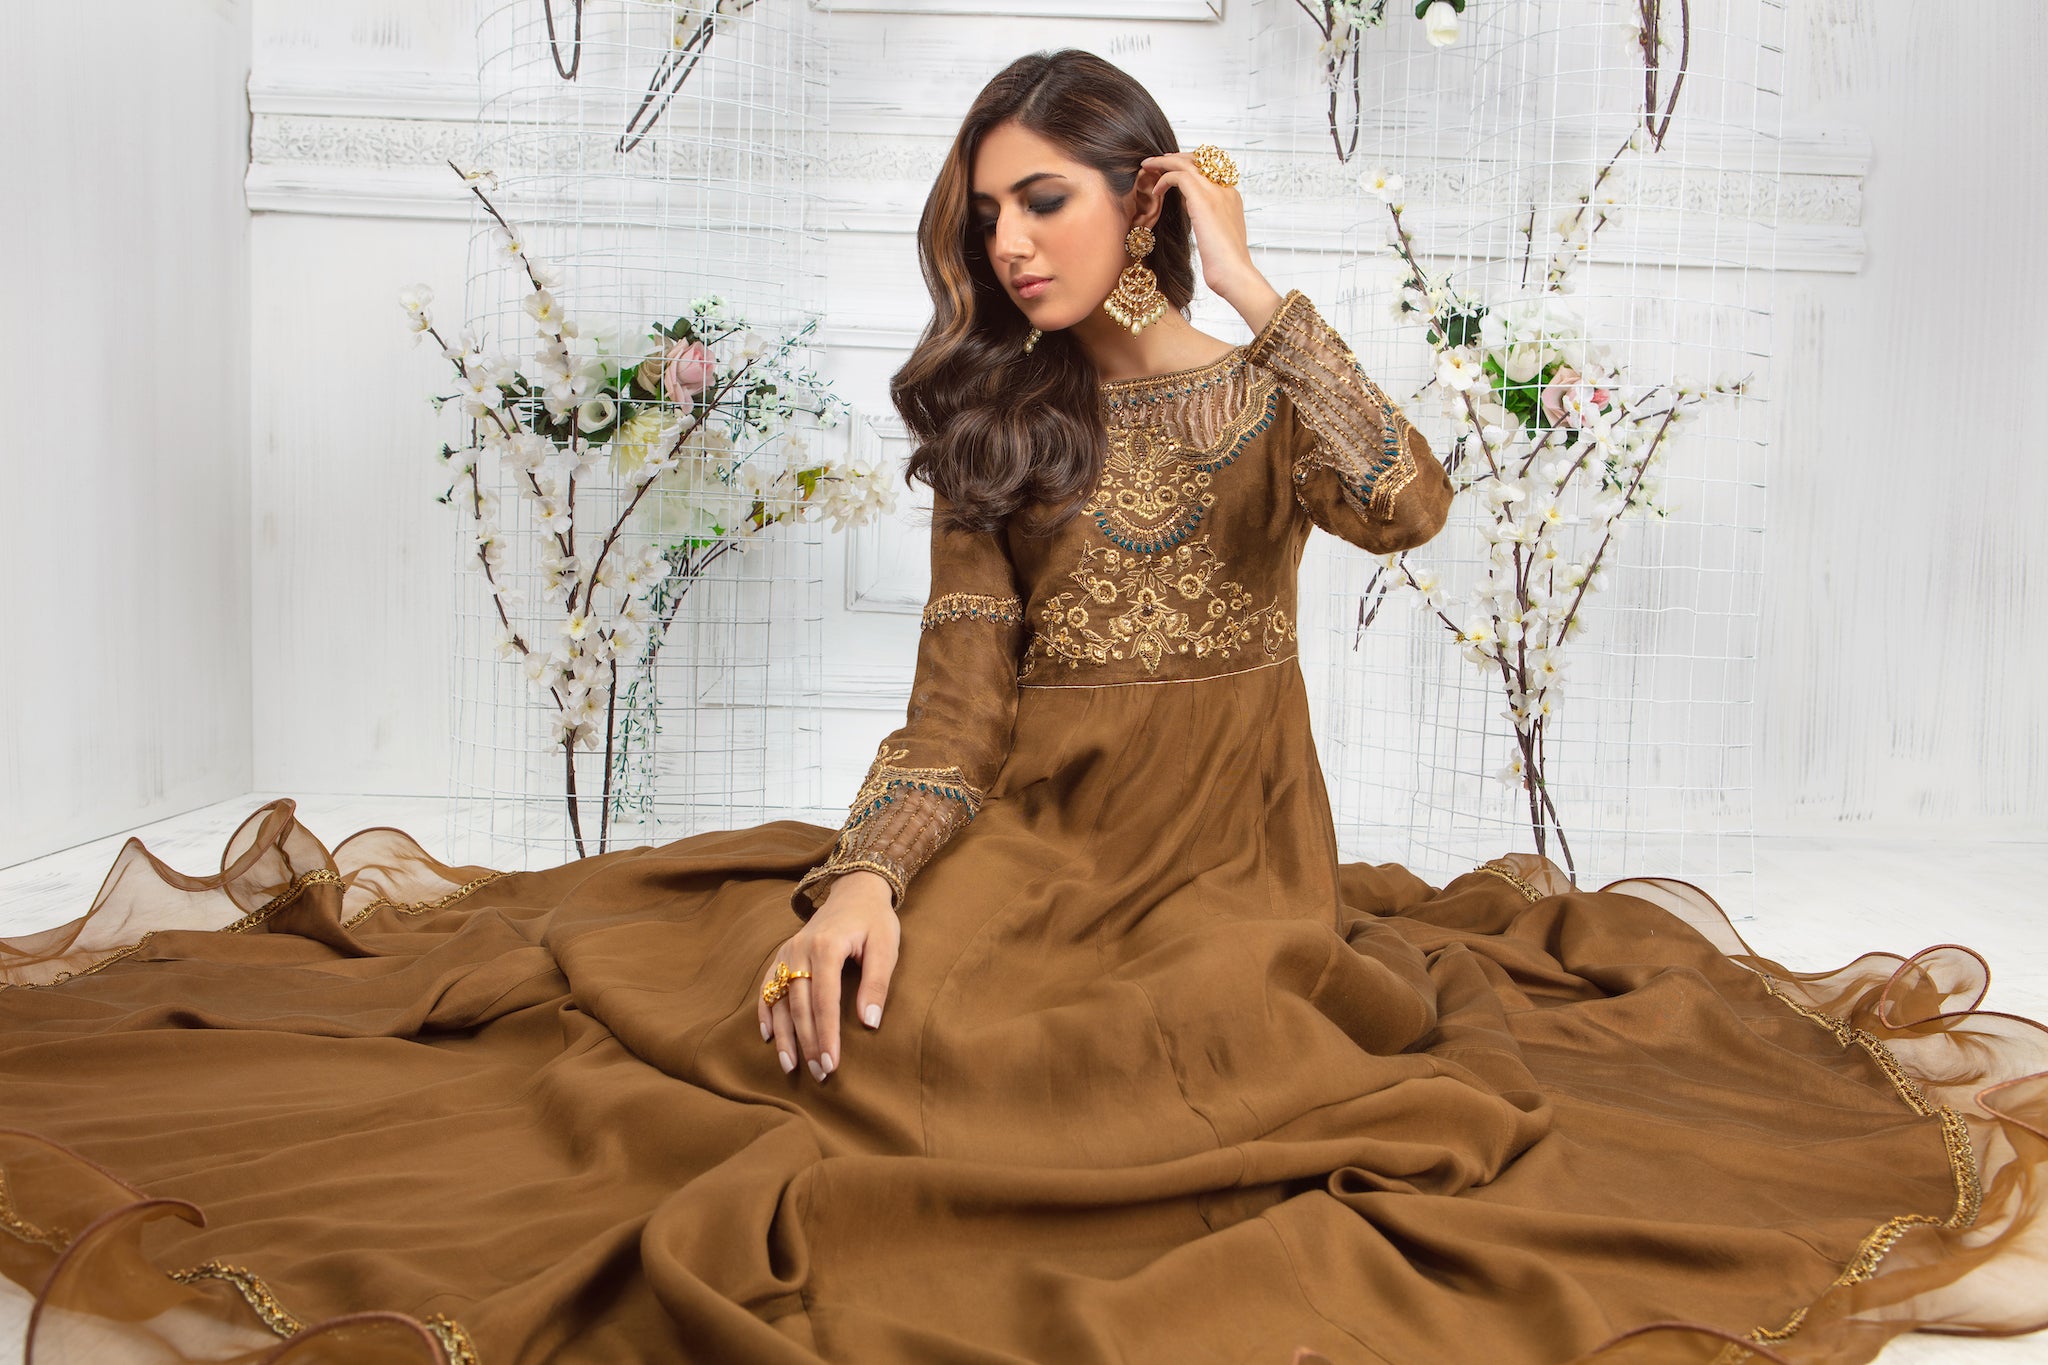 Selene | Pakistani Designer Outfit | Sarosh Salman